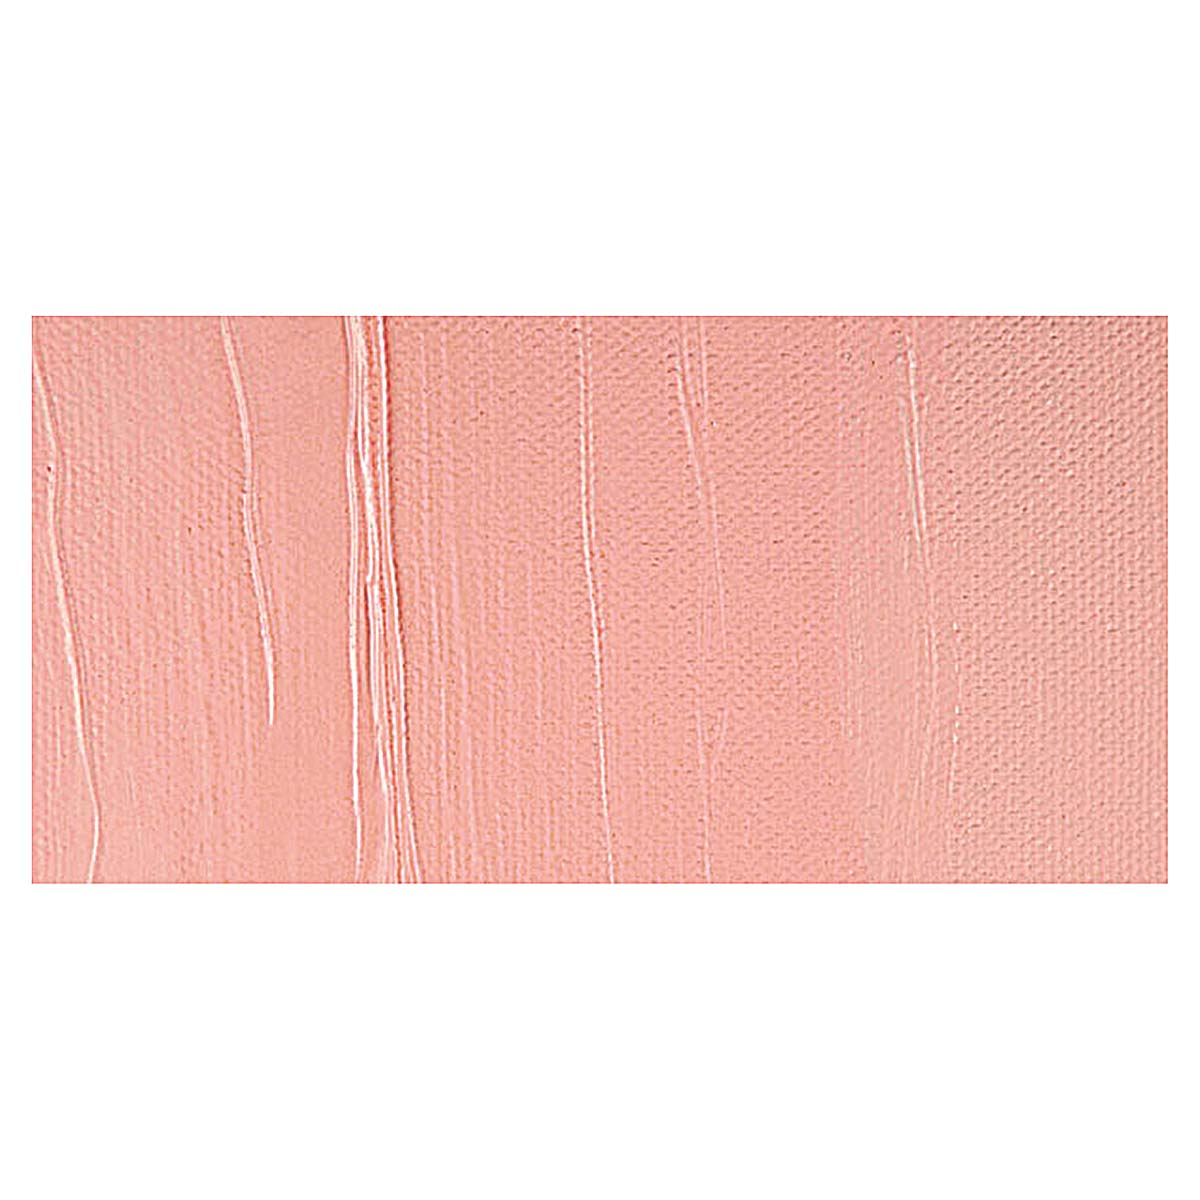 Blick Artists' Acrylic - Light Pink, 2 oz tube